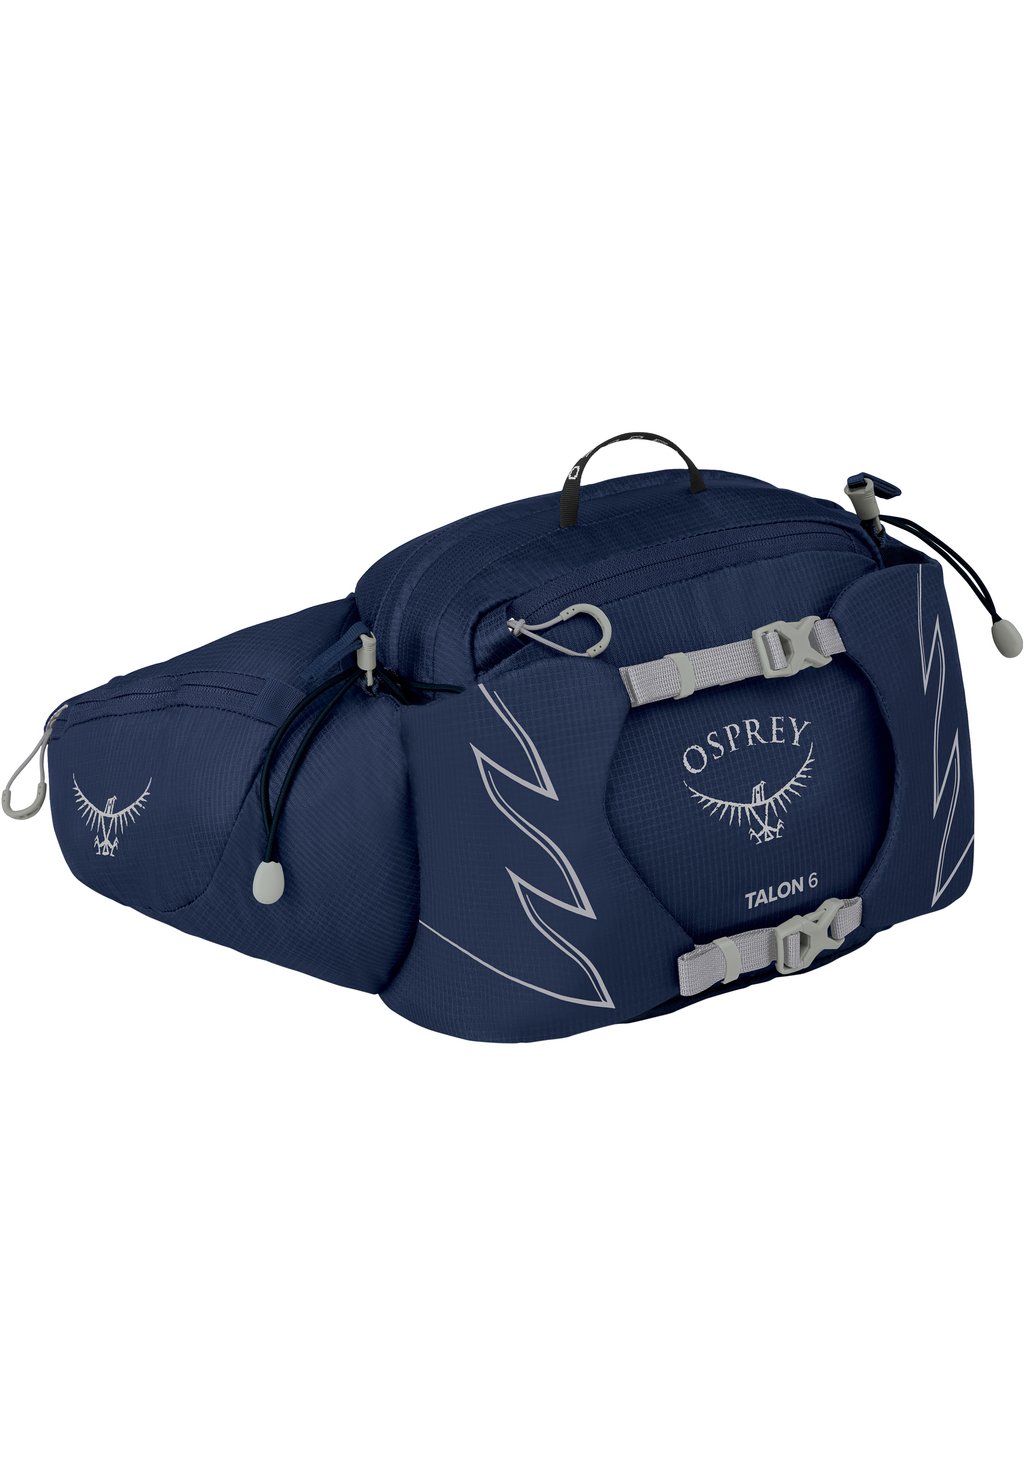 Поясная сумка TALON Osprey, цвет ceramic blue